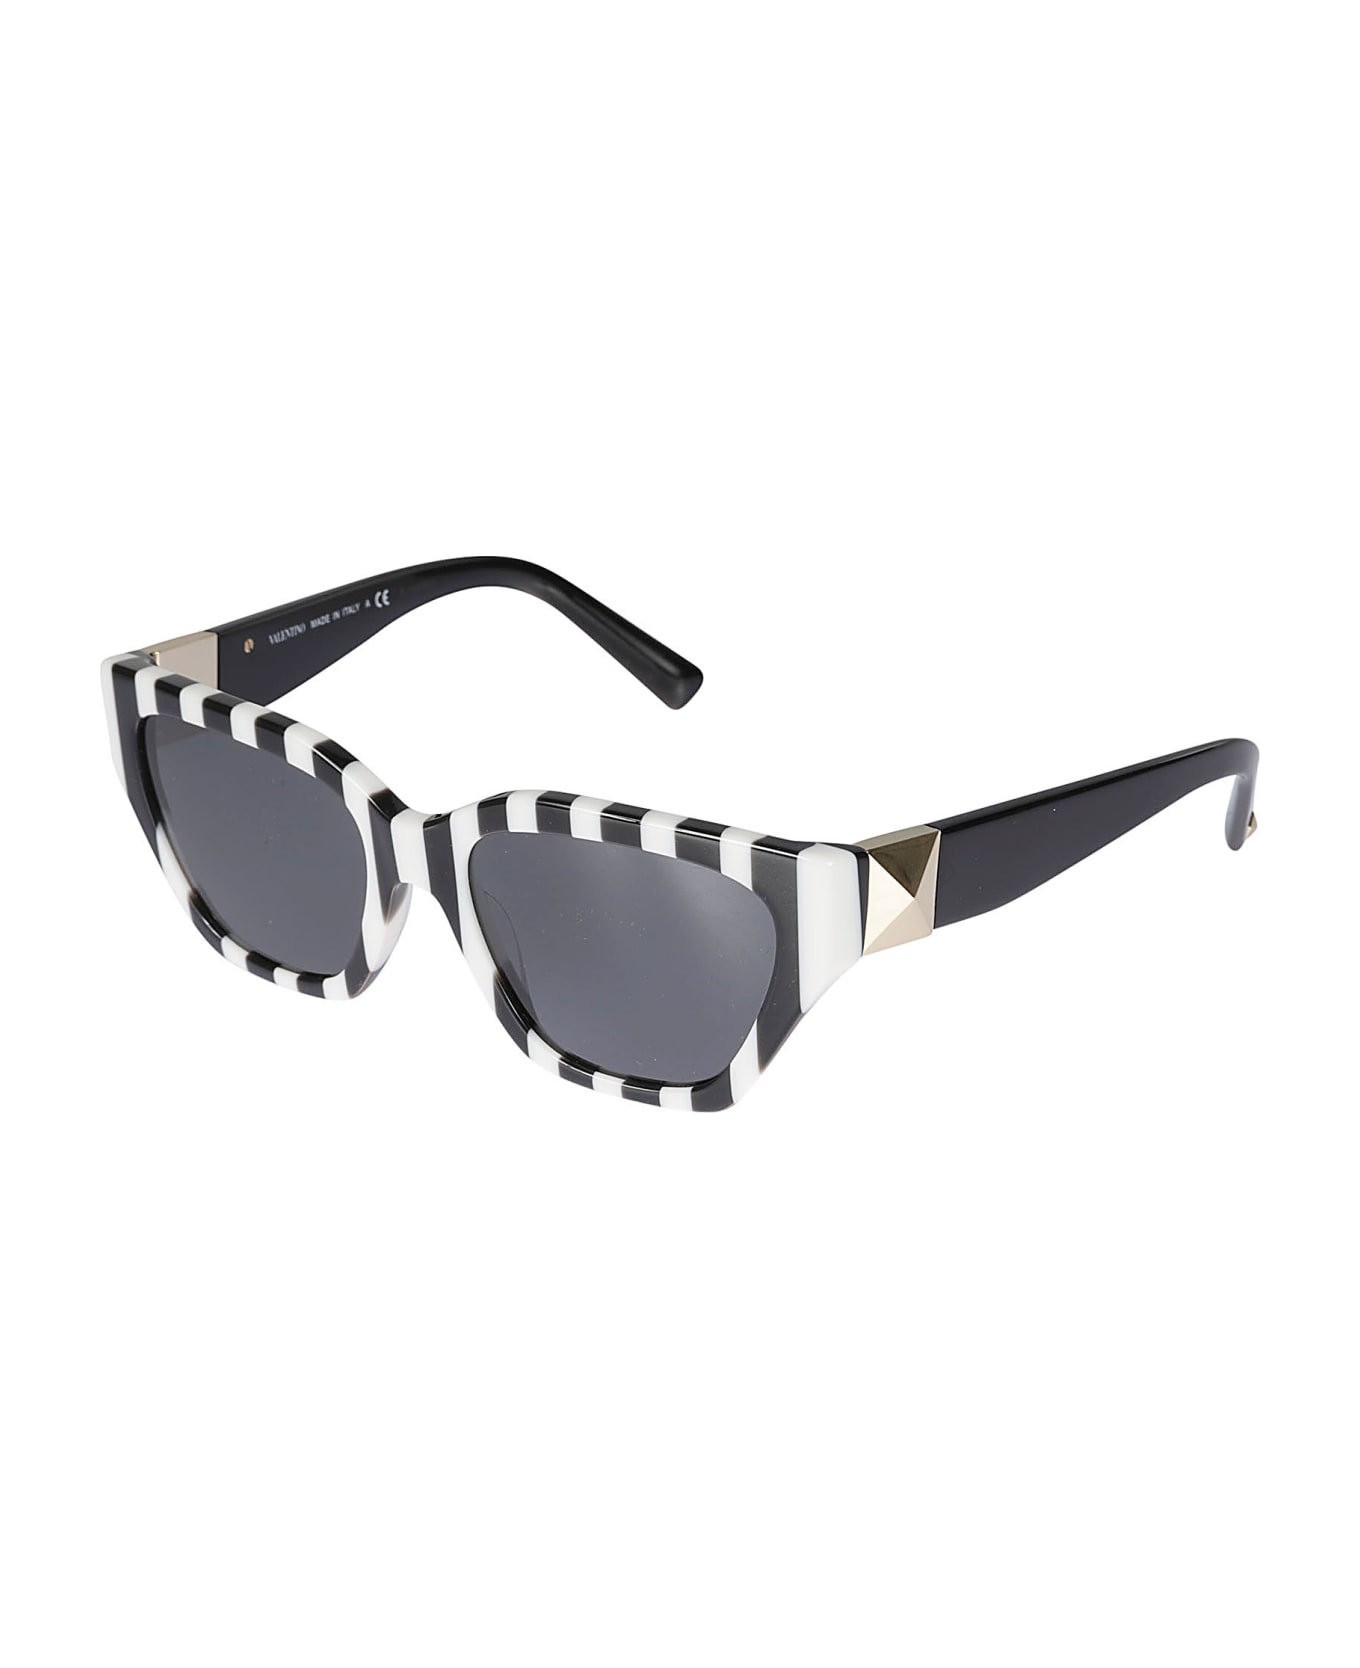 Valentino Eyewear Sole518187 textured Sunglasses - N/A